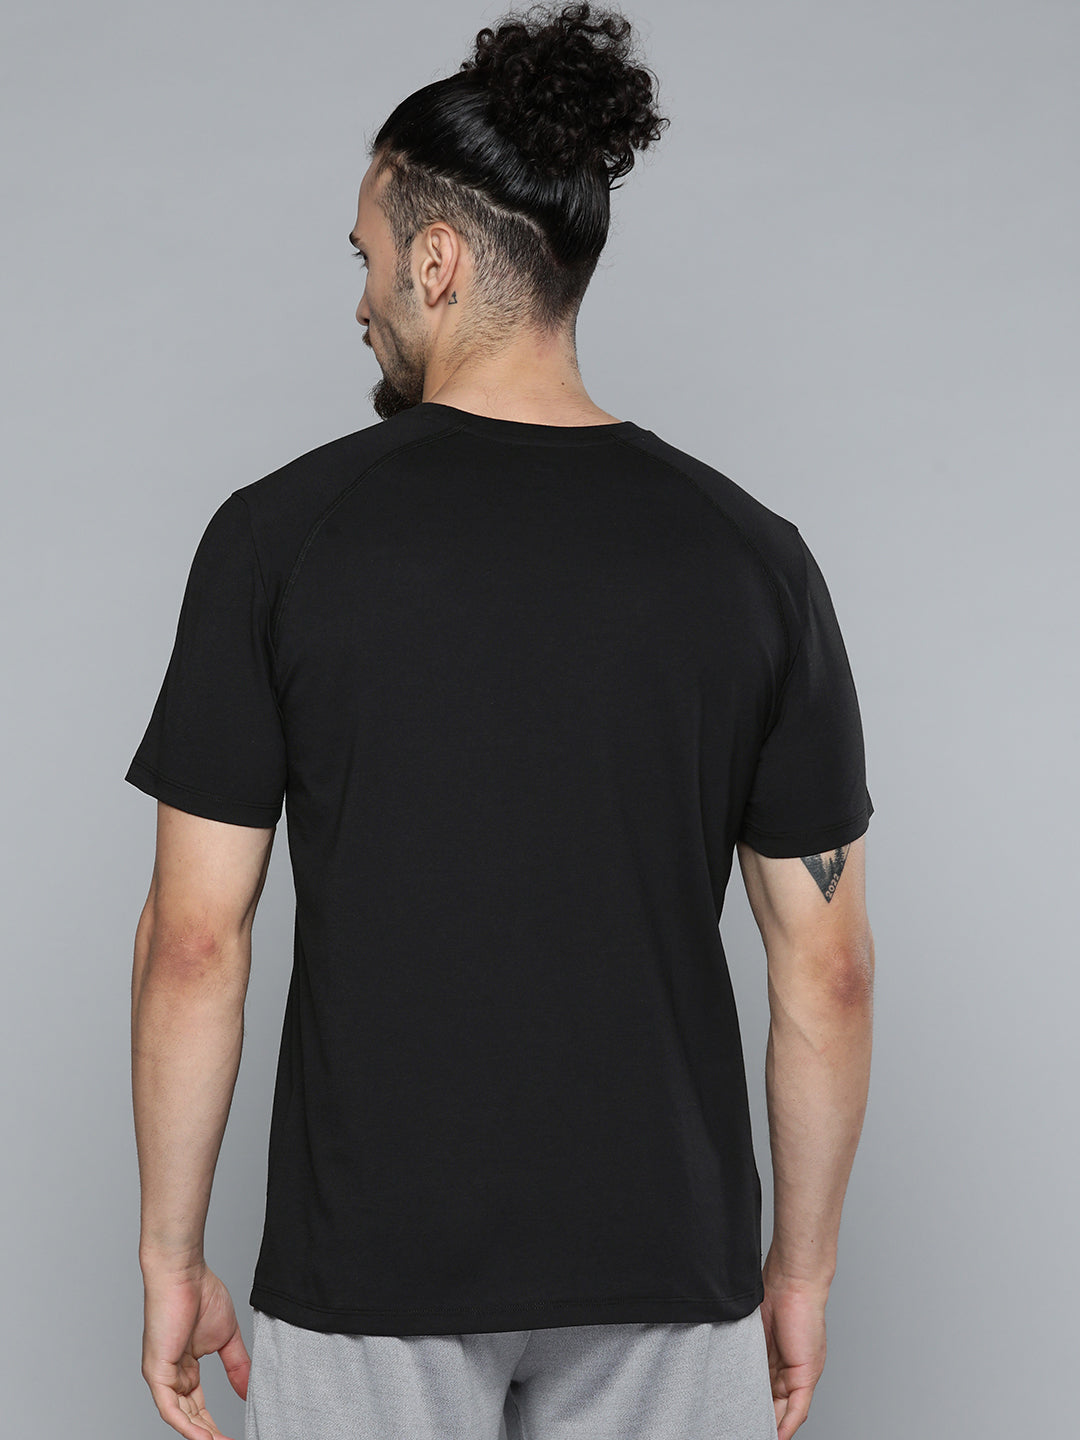 Alcis Men Black  Grey Printed Slim Fit Training or Gym T-shirt